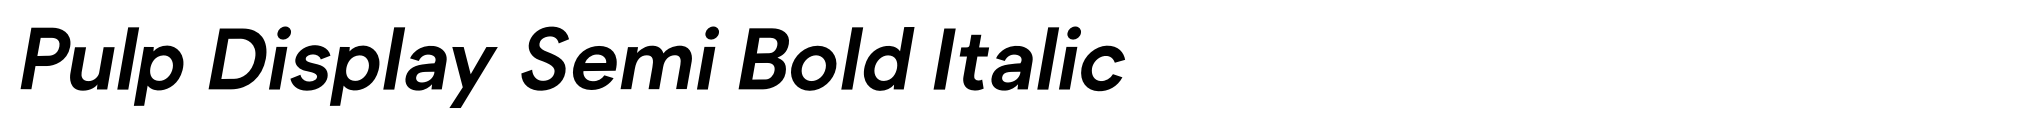 Pulp Display Semi Bold Italic image